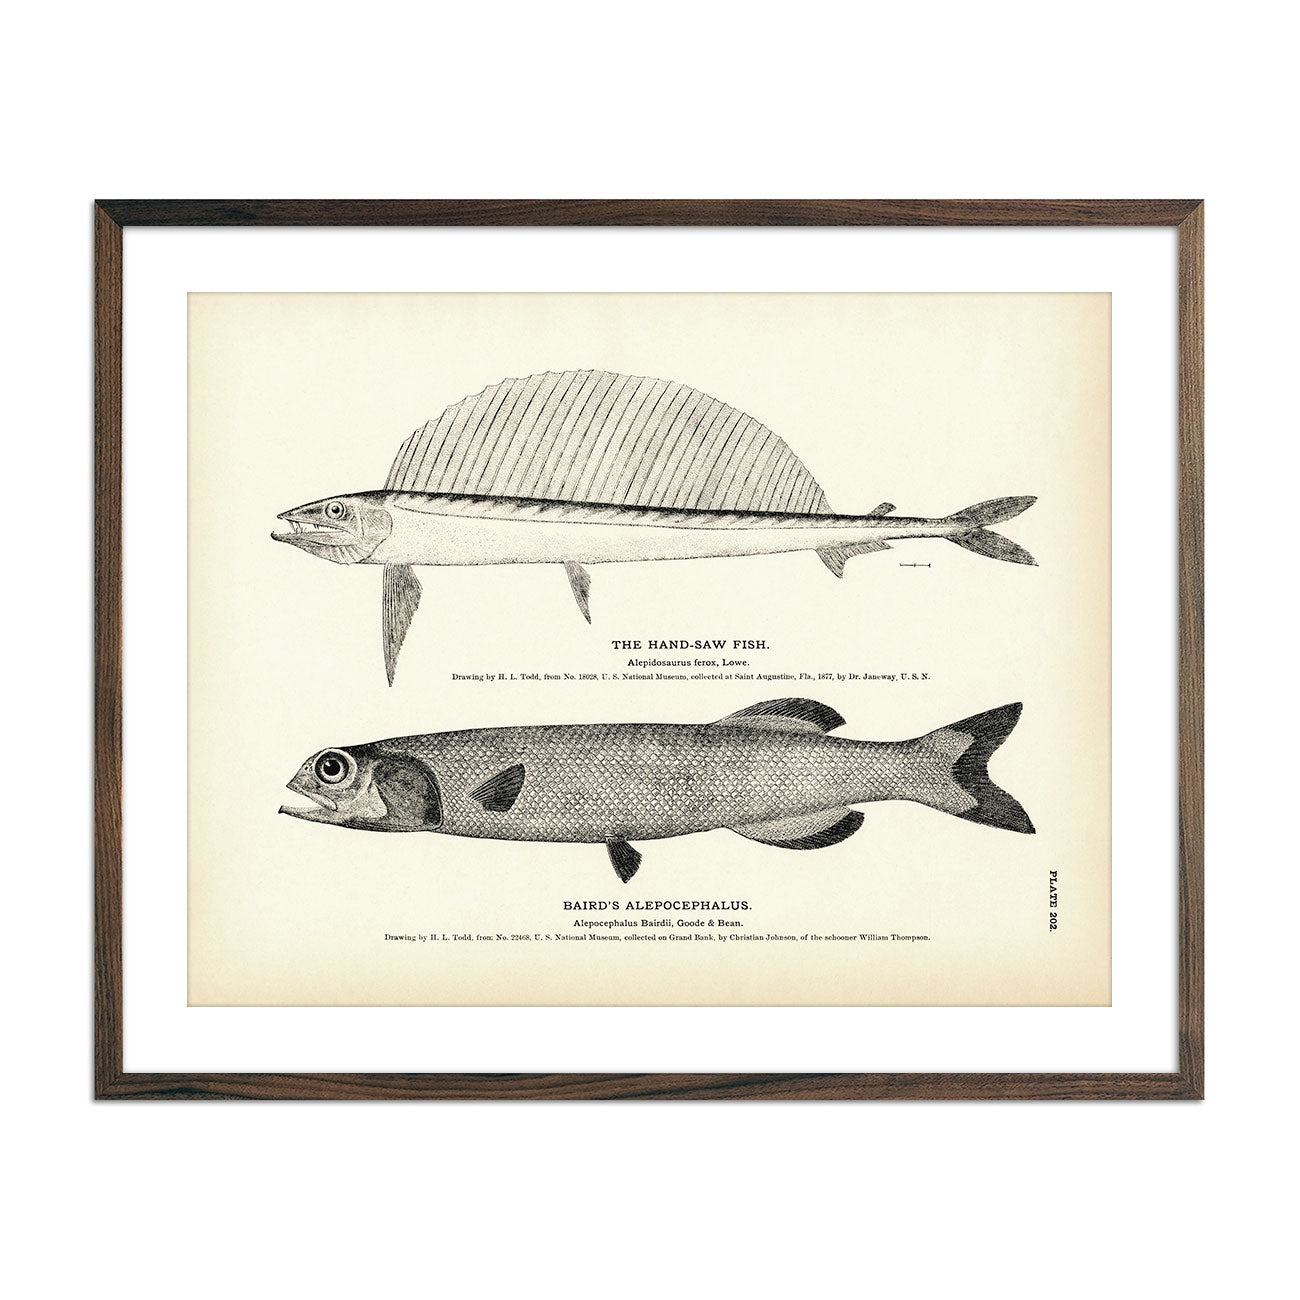 Vintage Hand-Saw Fish and Baird's Alepocephalus fish print